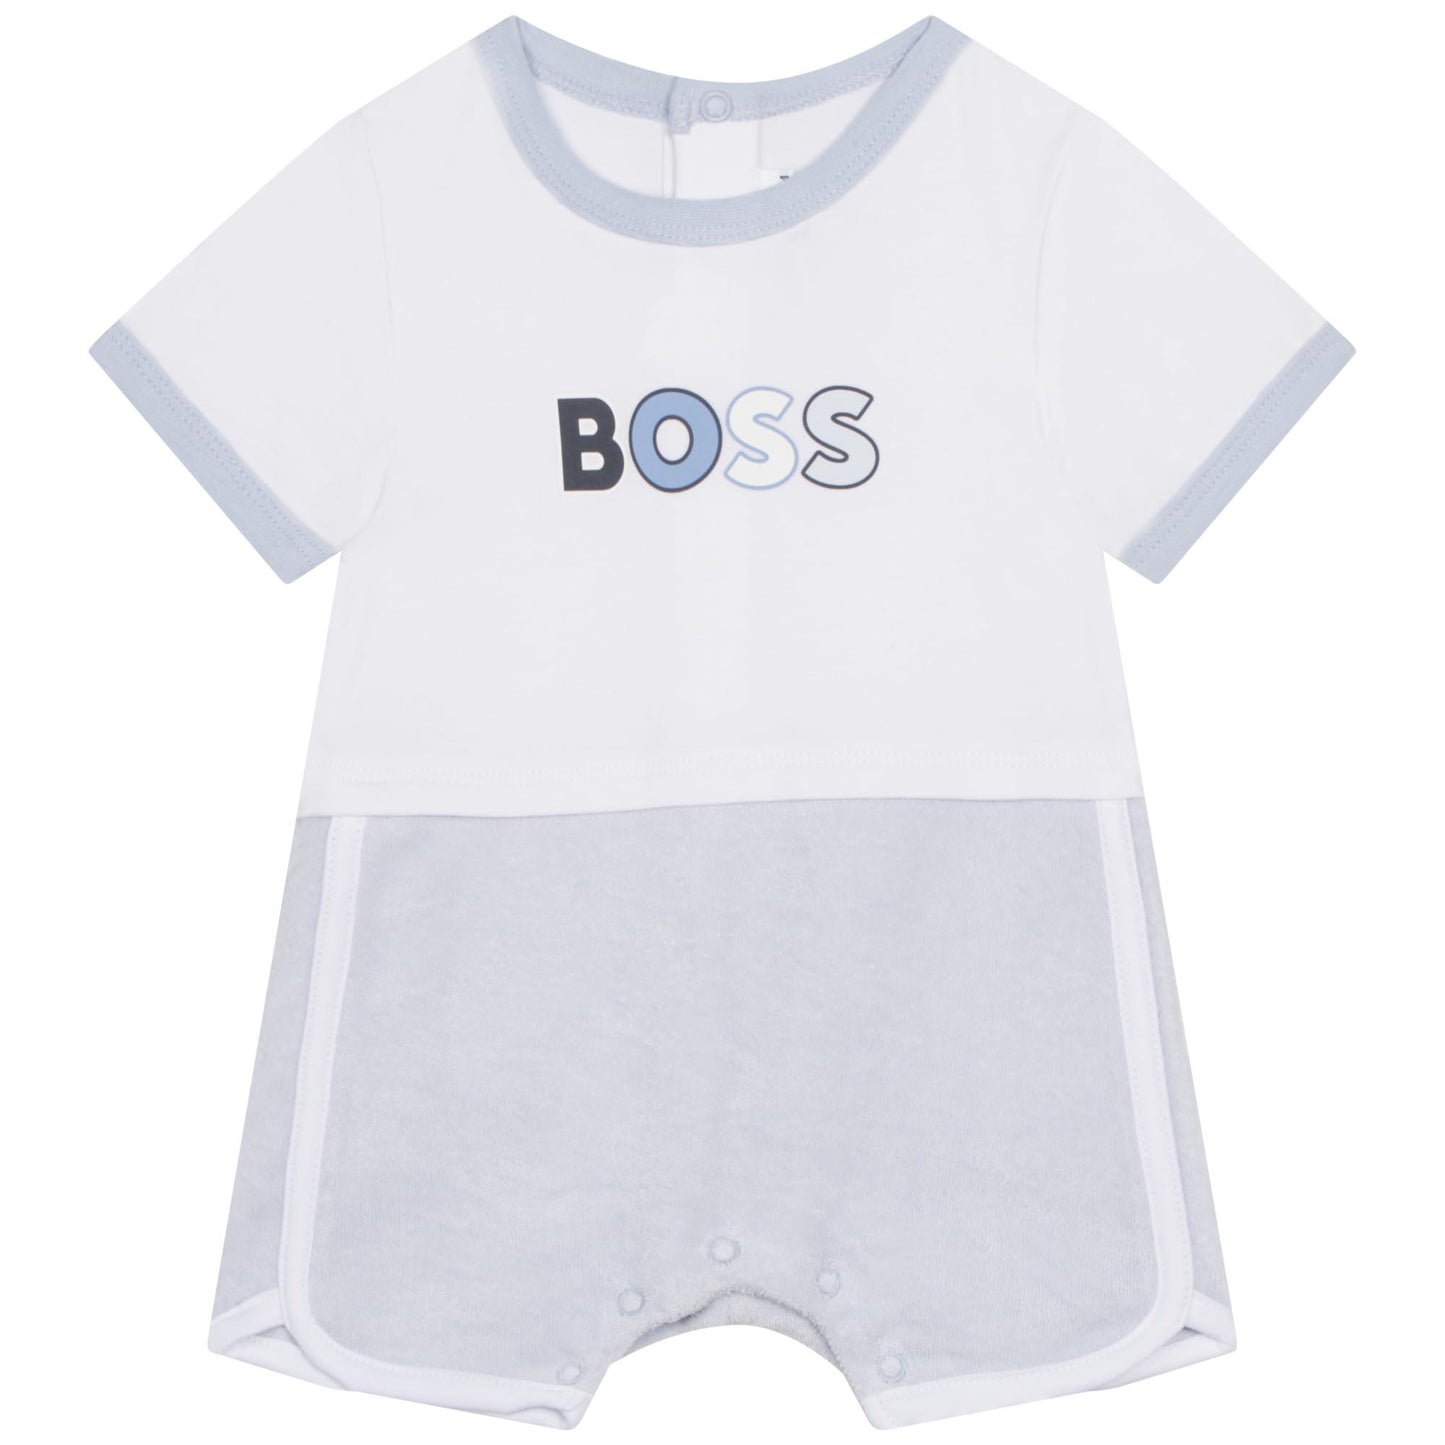 Hugo Boss Baby Boy's Pale Blue Dual-Fabric Short Playsuit